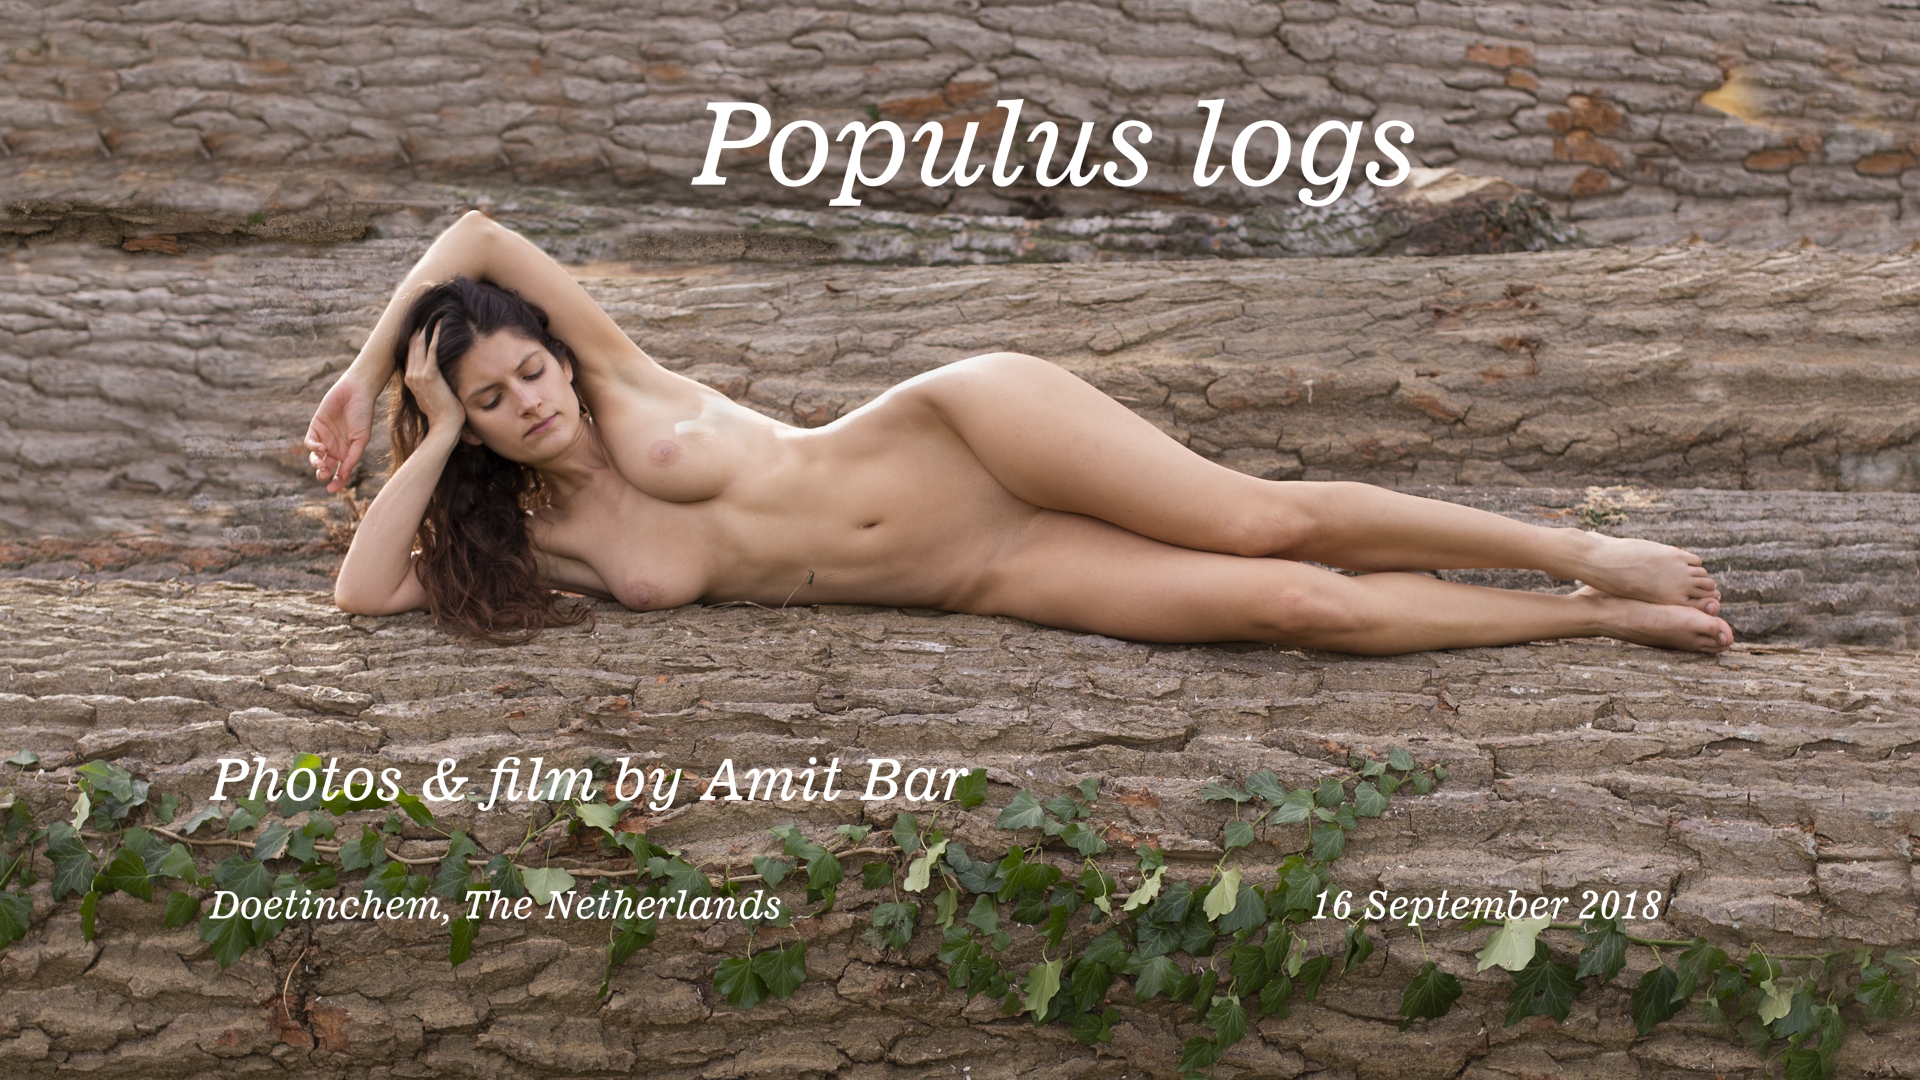 Populus logs video